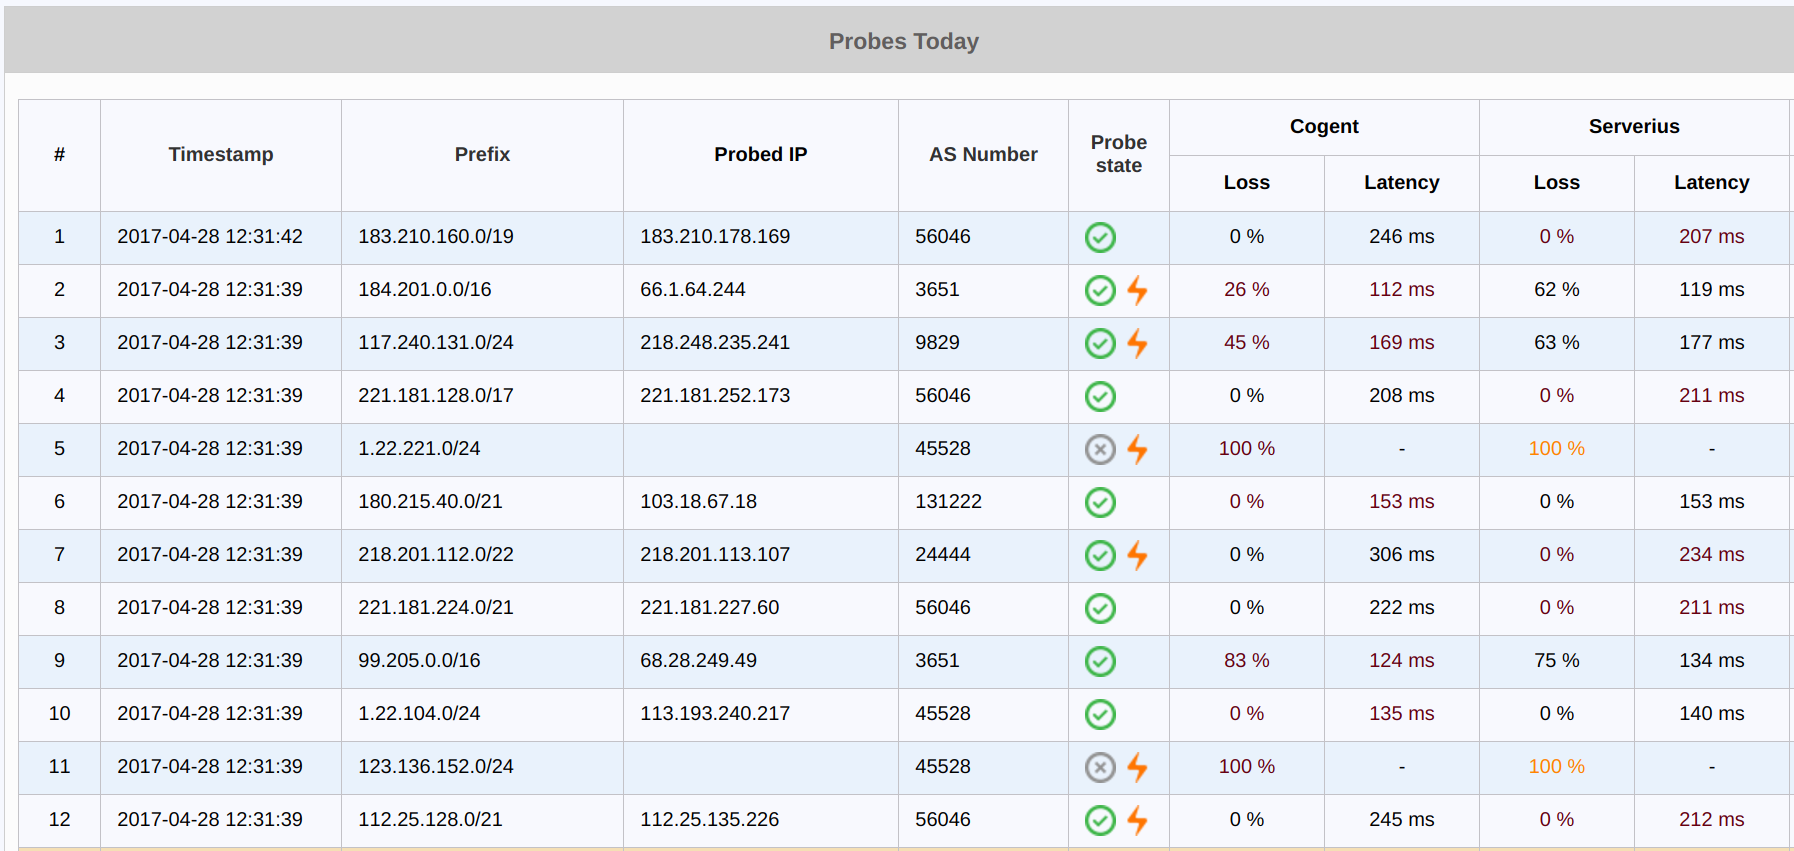 figure screenshots/report-probes-today.png